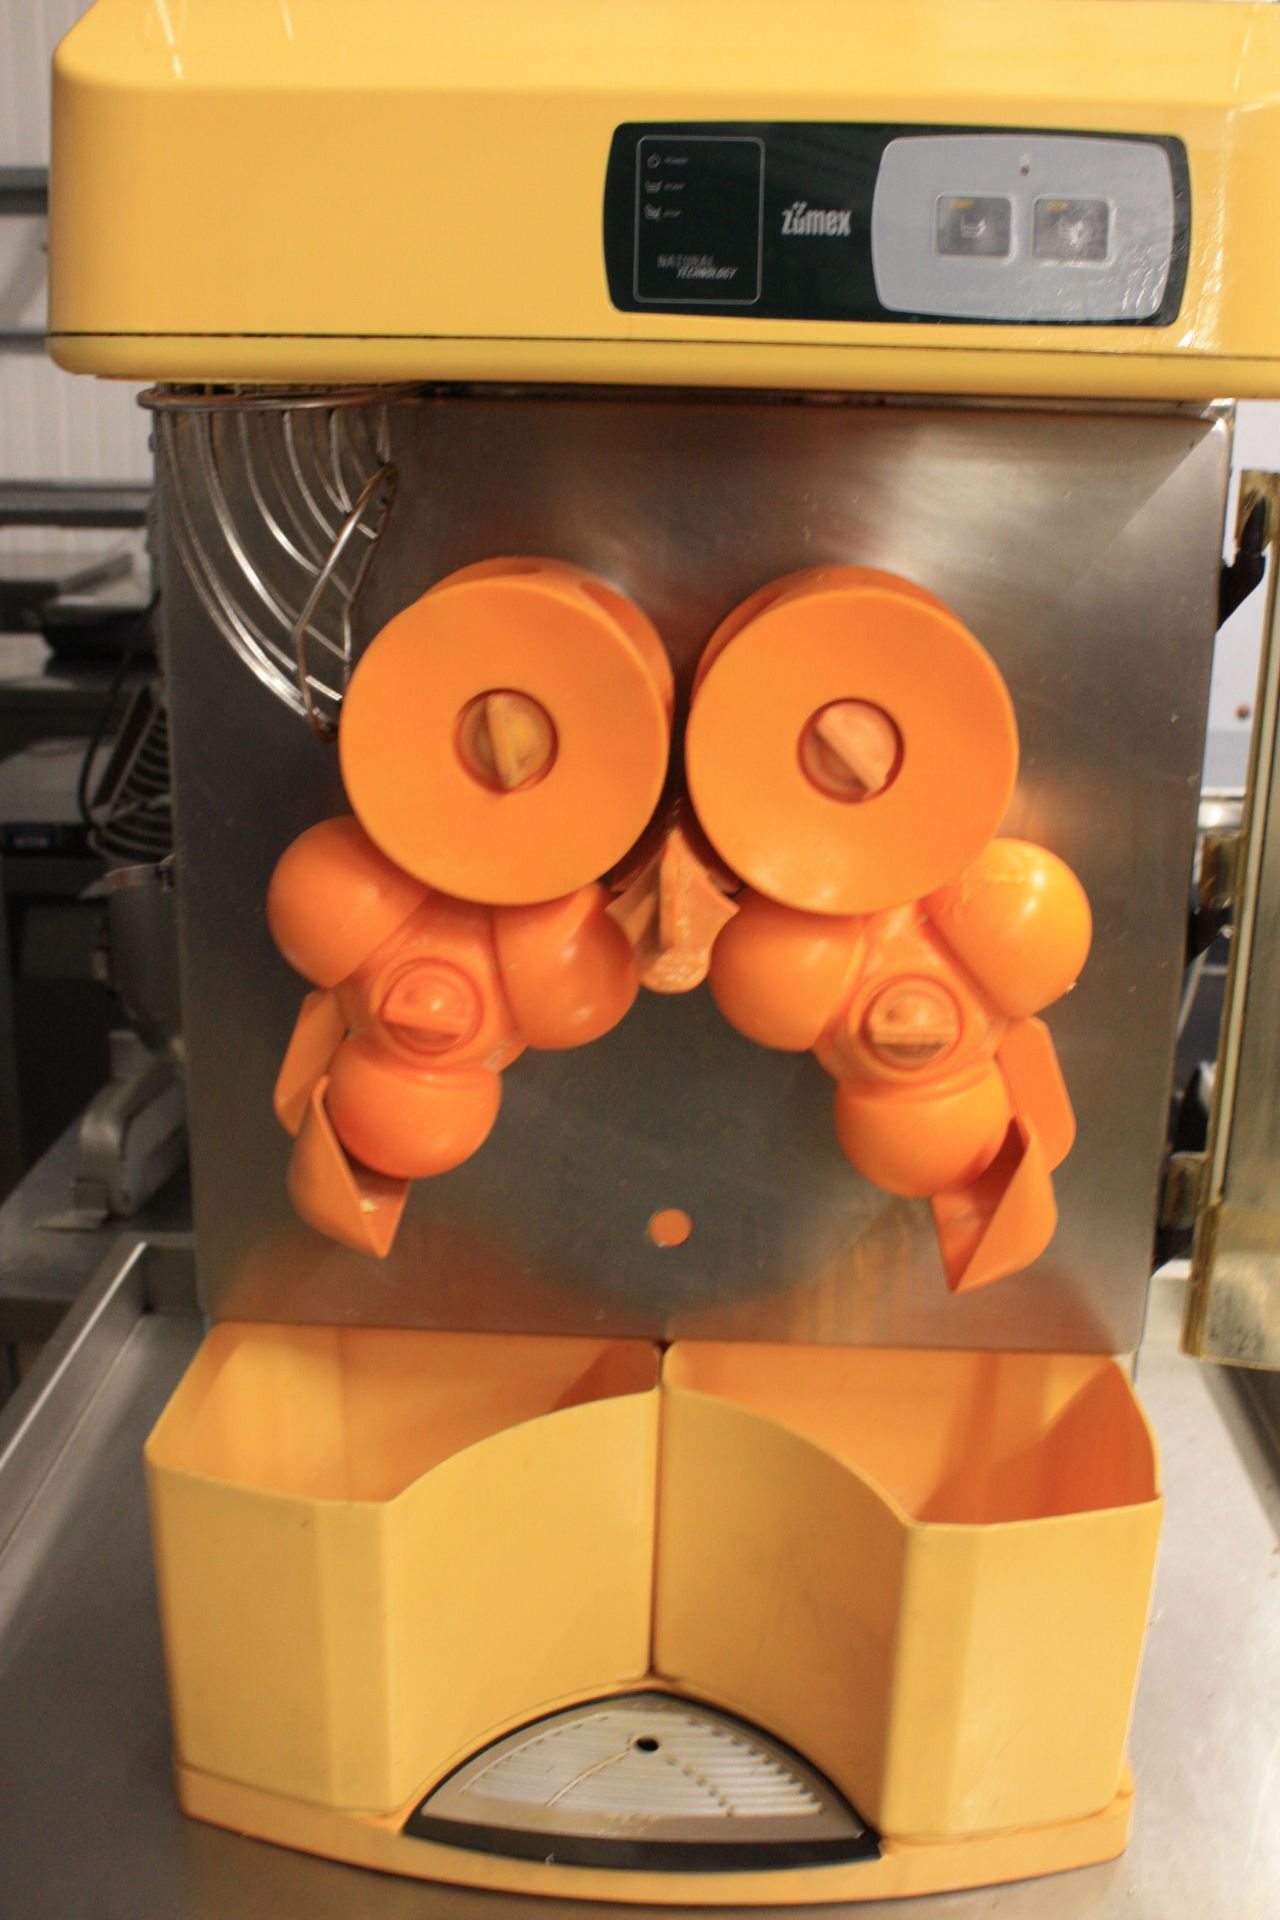 Zumex Whole fresh orange juicer on stainless steel stand. 240v. Model Zumex 200. - Image 3 of 4